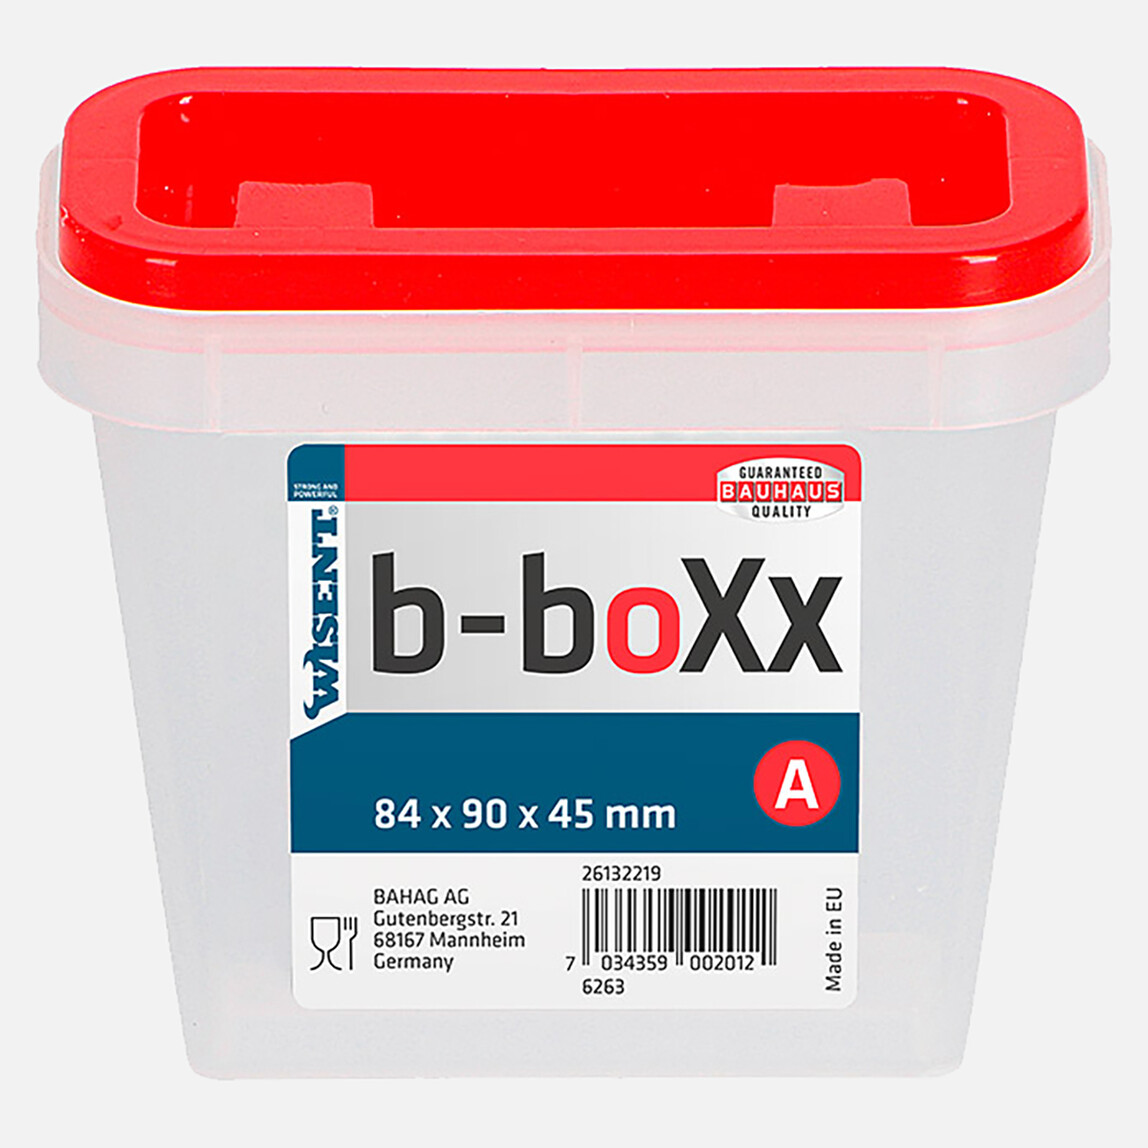    Wisent B-Boxx Saklama Kutusu Boy-A 4,5X9,0X8,4 Cm  